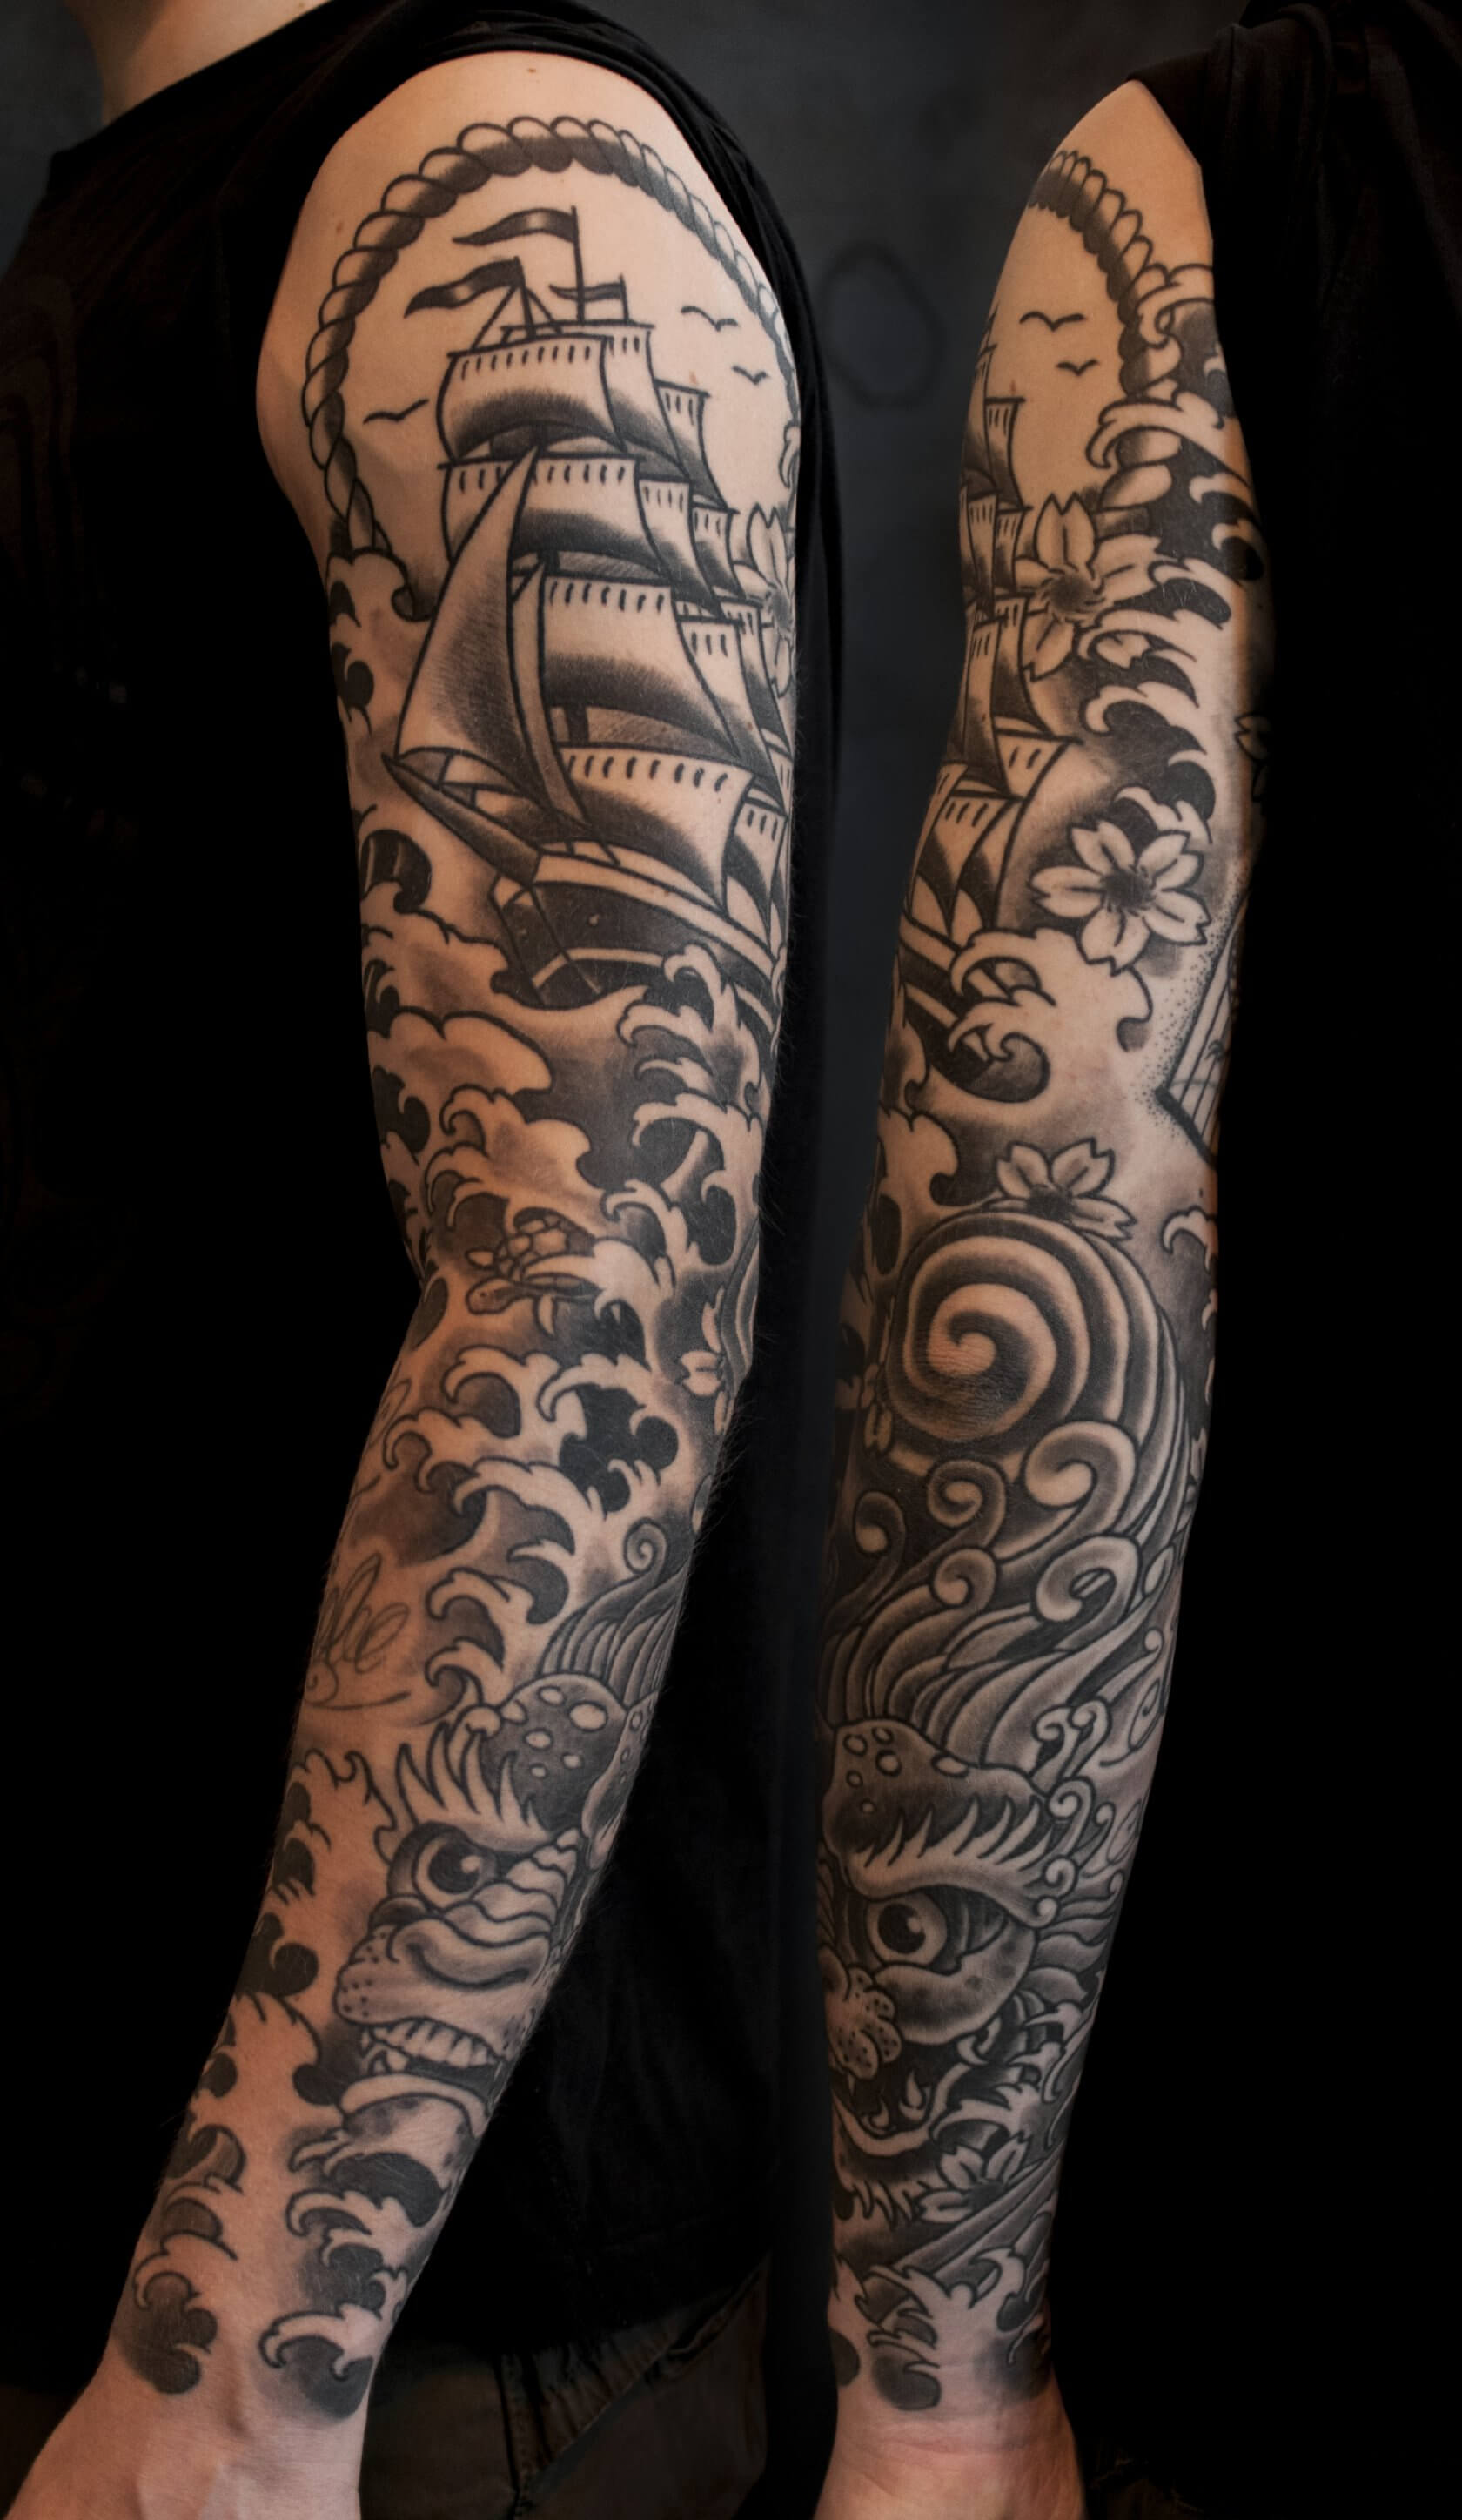 Tattoo arm frau schwarz weiß